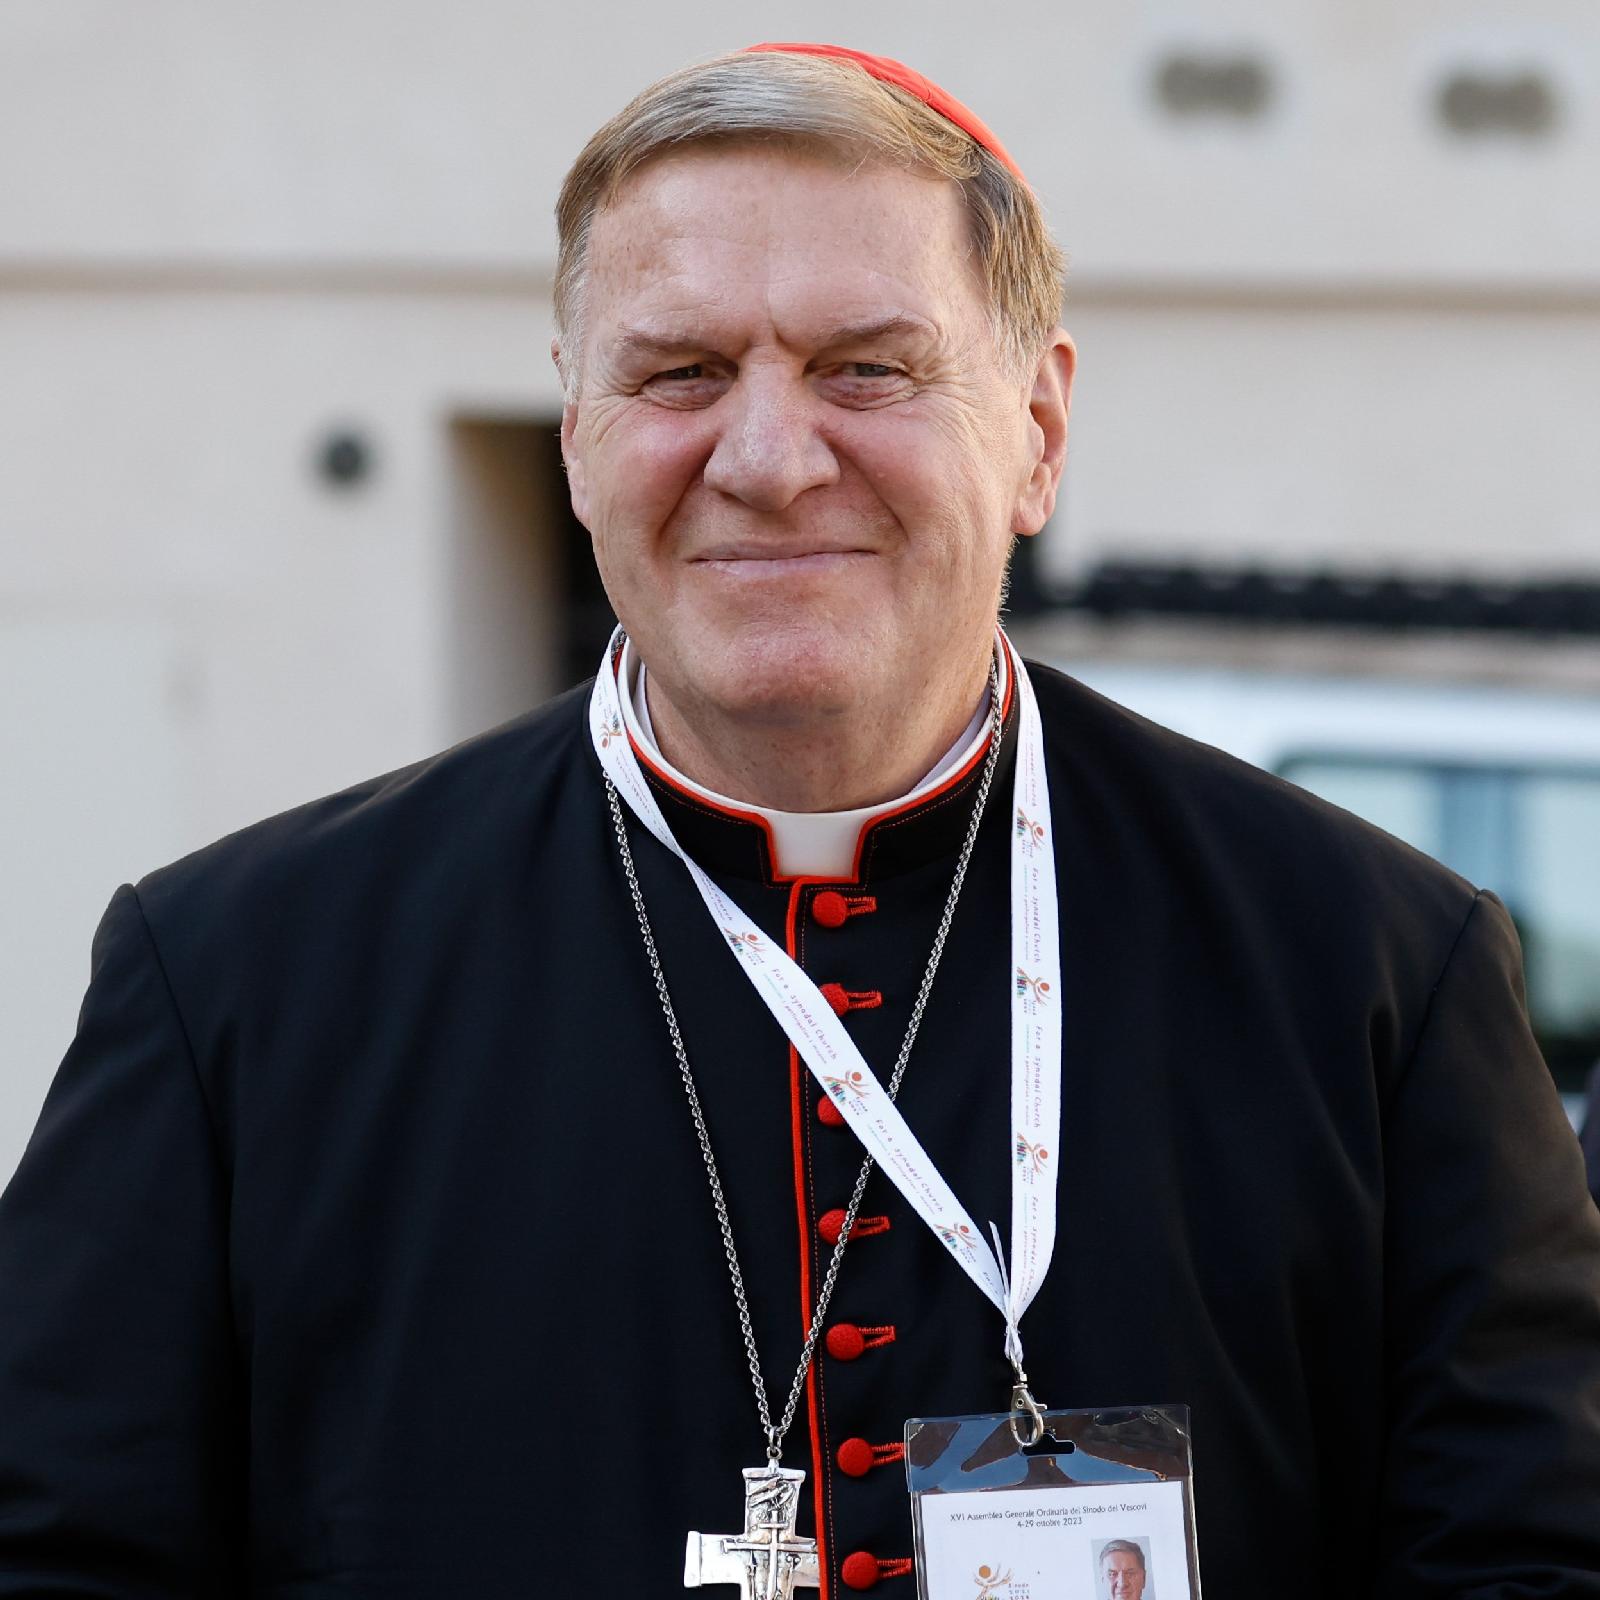 Cardinal Joseph Tobin